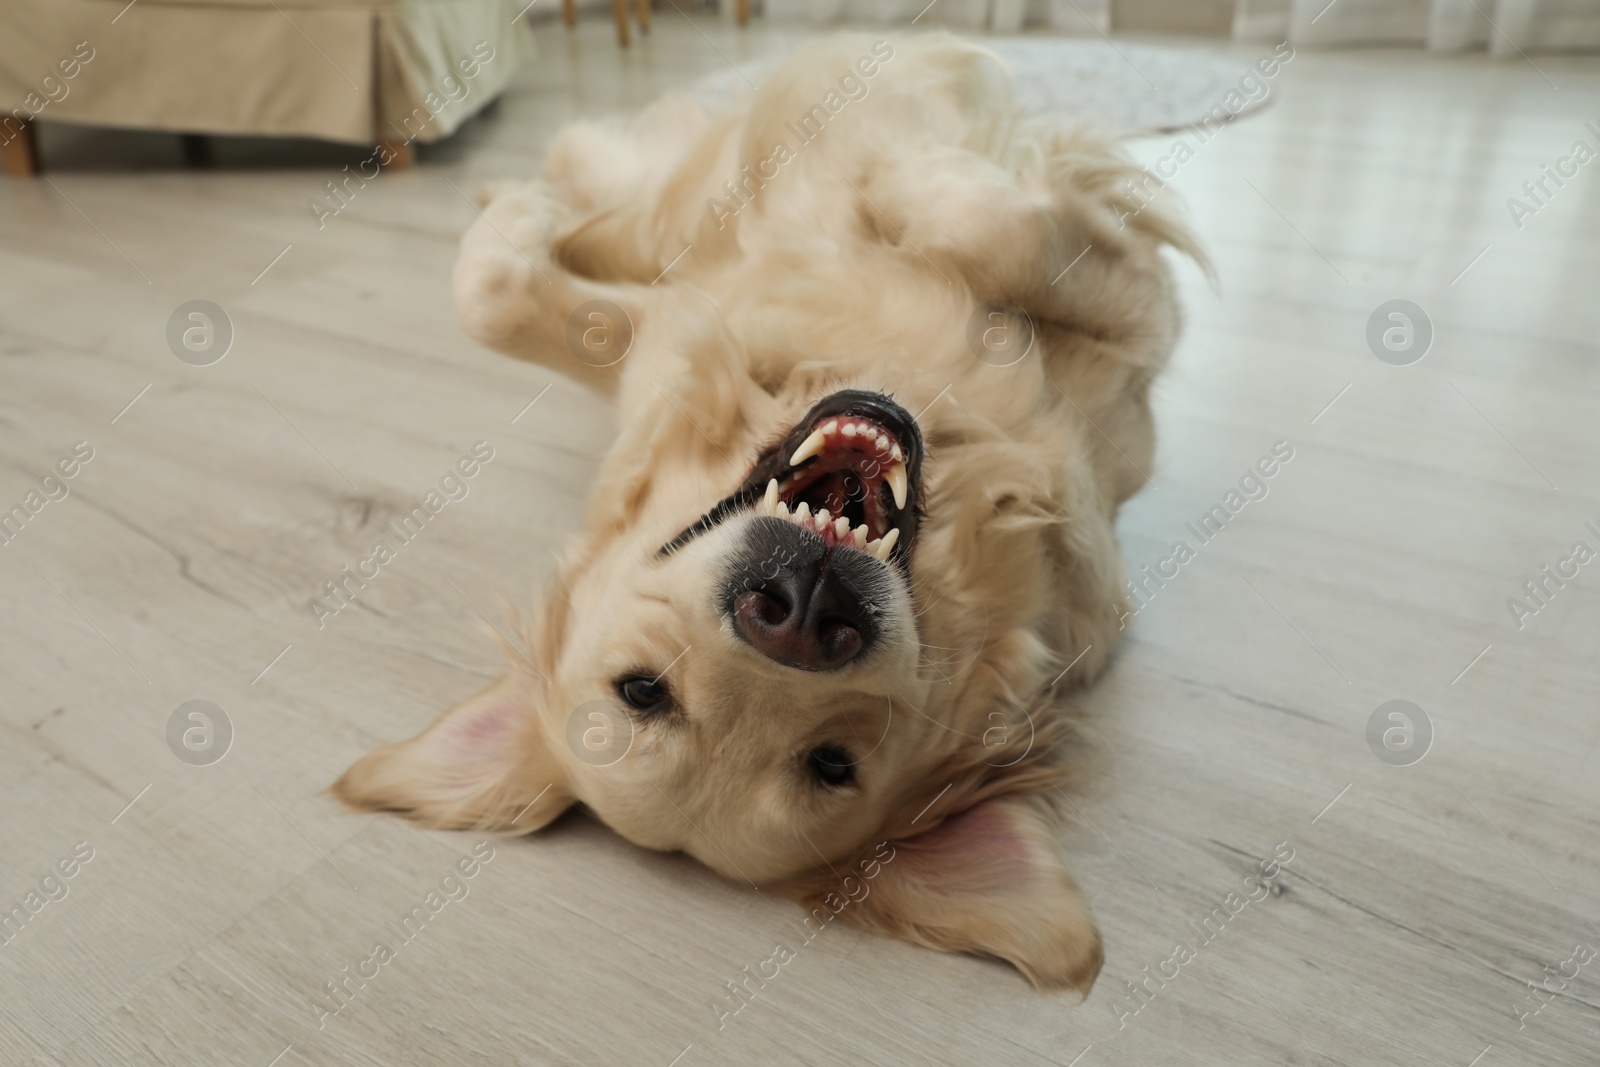 Photo of Adorable Golden Retriever dog lying on floor indoors